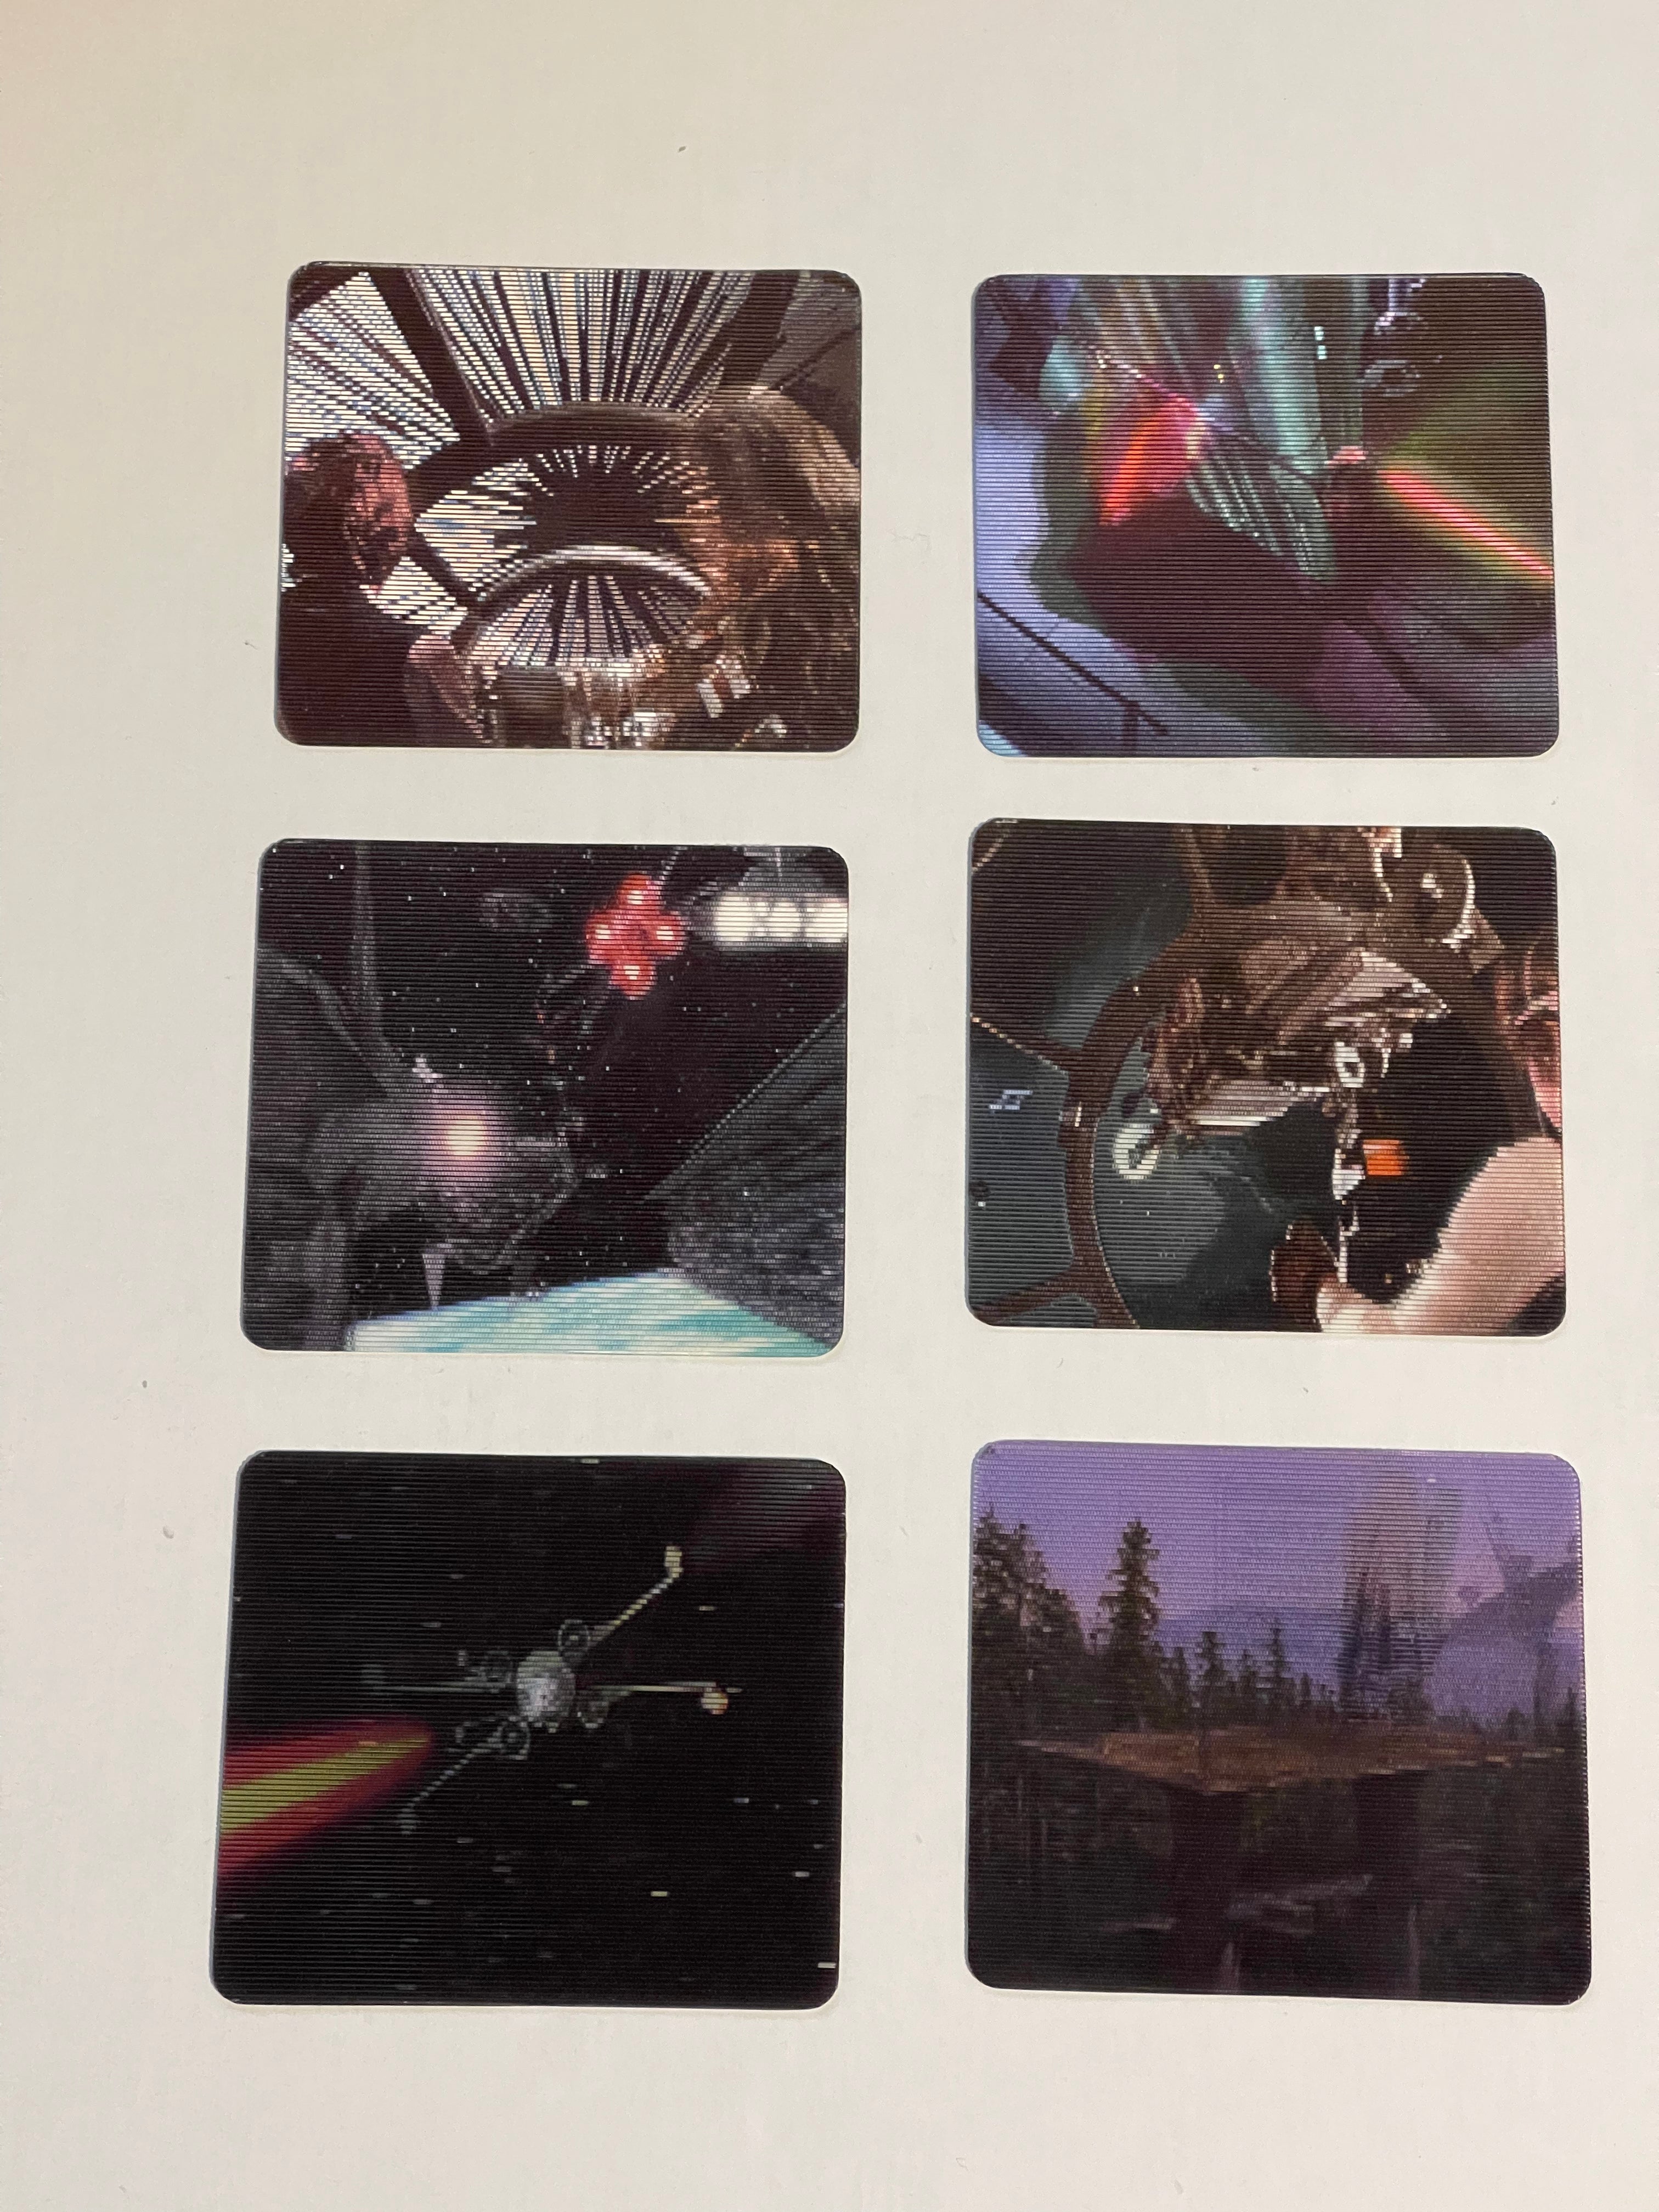 Star Wars Doritos 6 lenticular cards set 1996